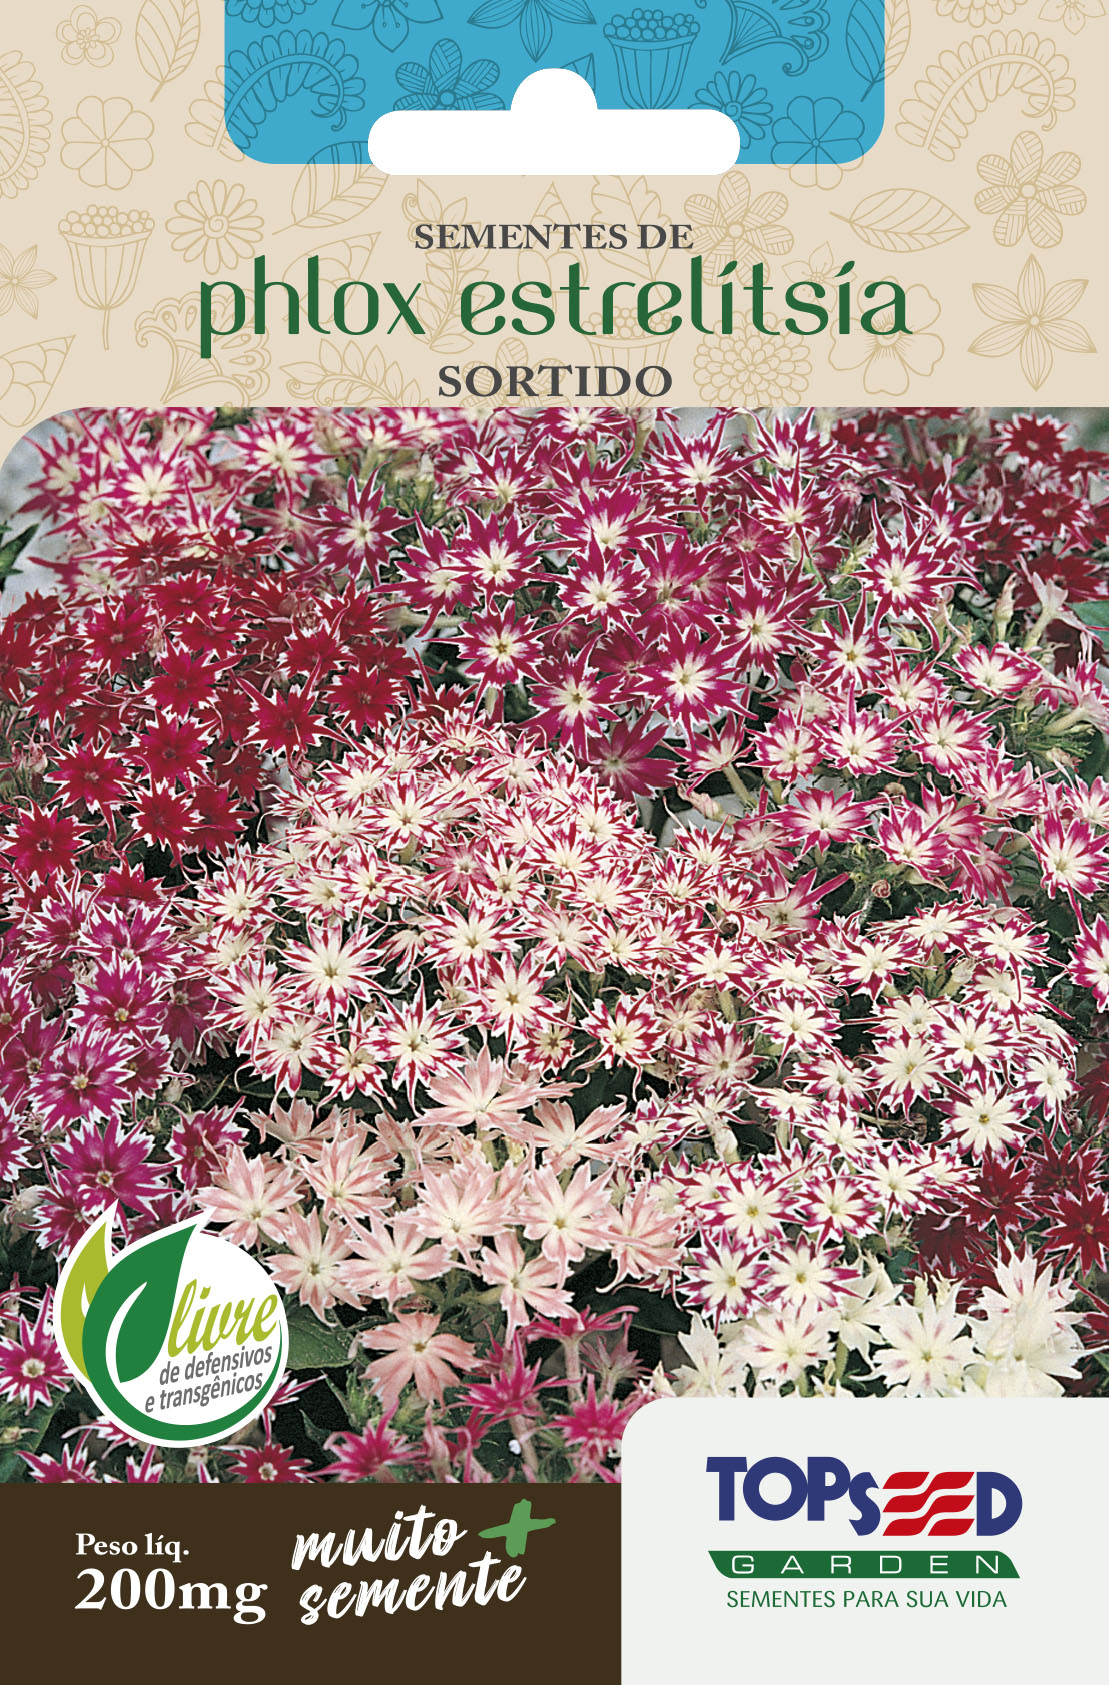 Phlox Estrelitsia Sortida